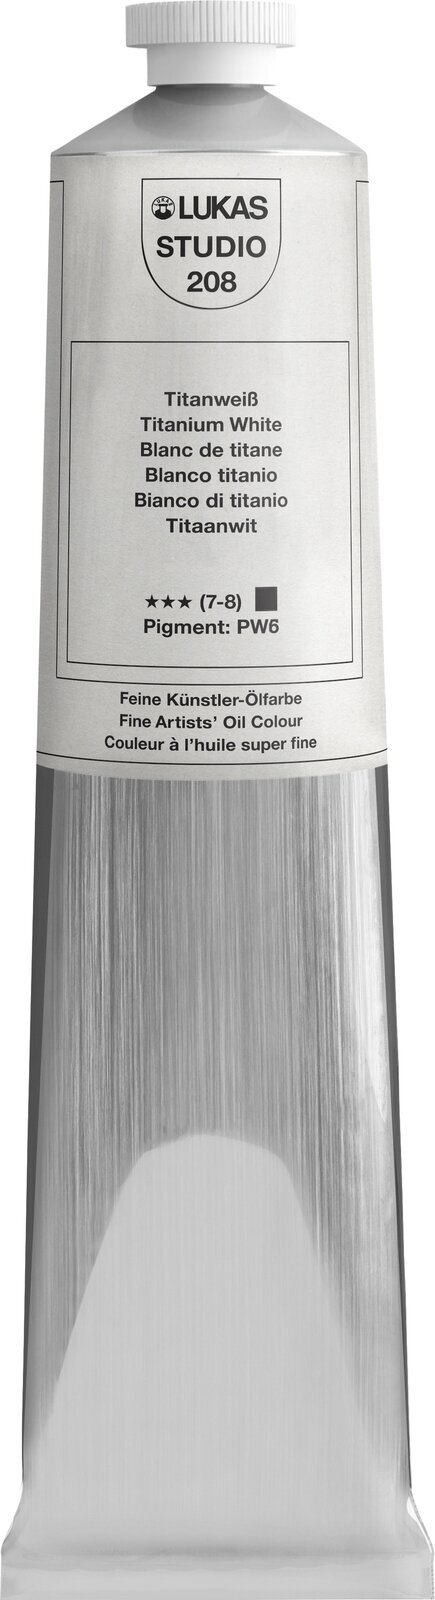 Oil colour Lukas Studio Oil Paint Aluminium Tube Oil Paint Titanium White 200 ml 1 pc